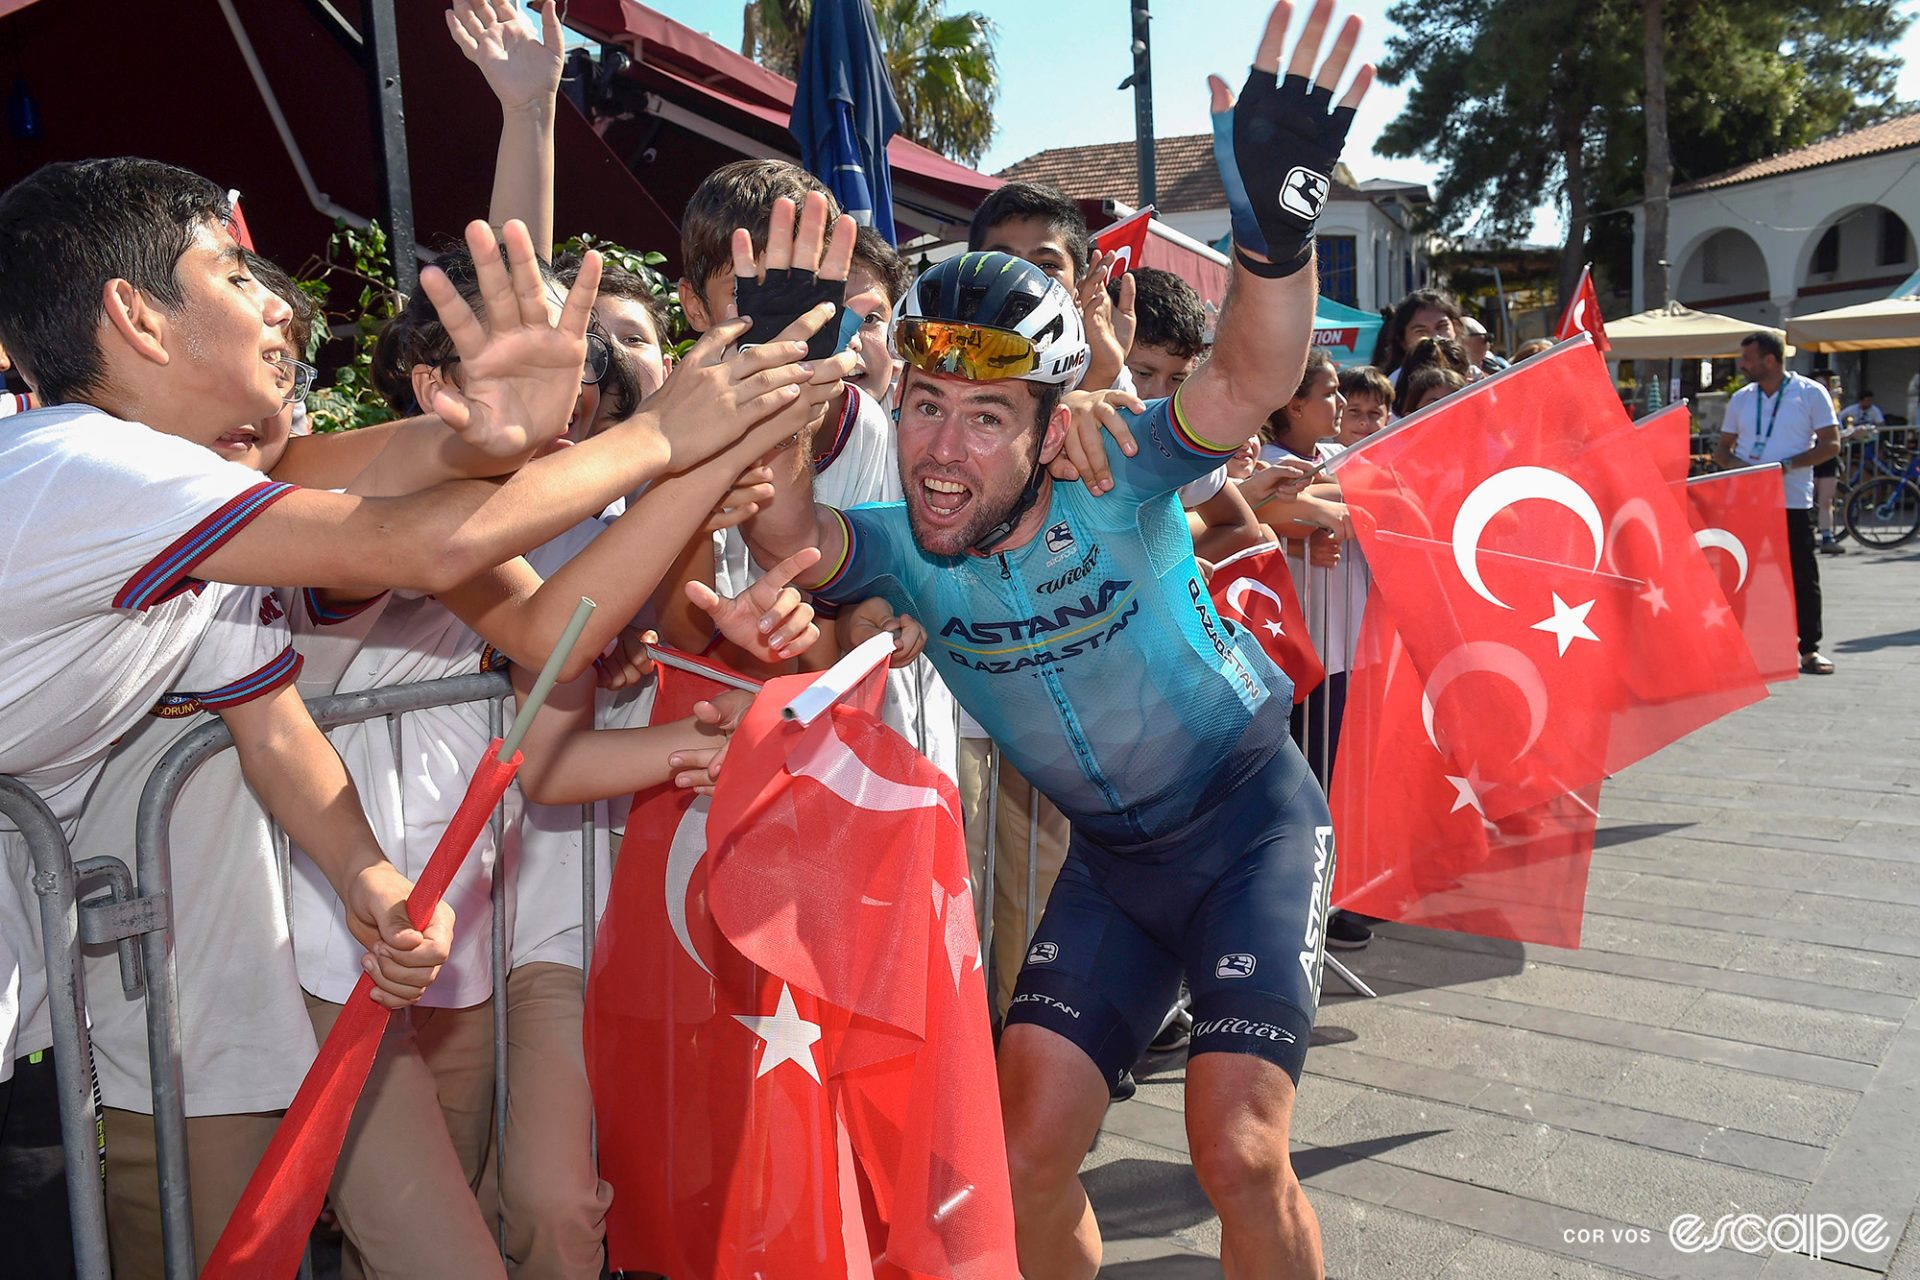 Mark Cavendish having fun with fans in Turkey.